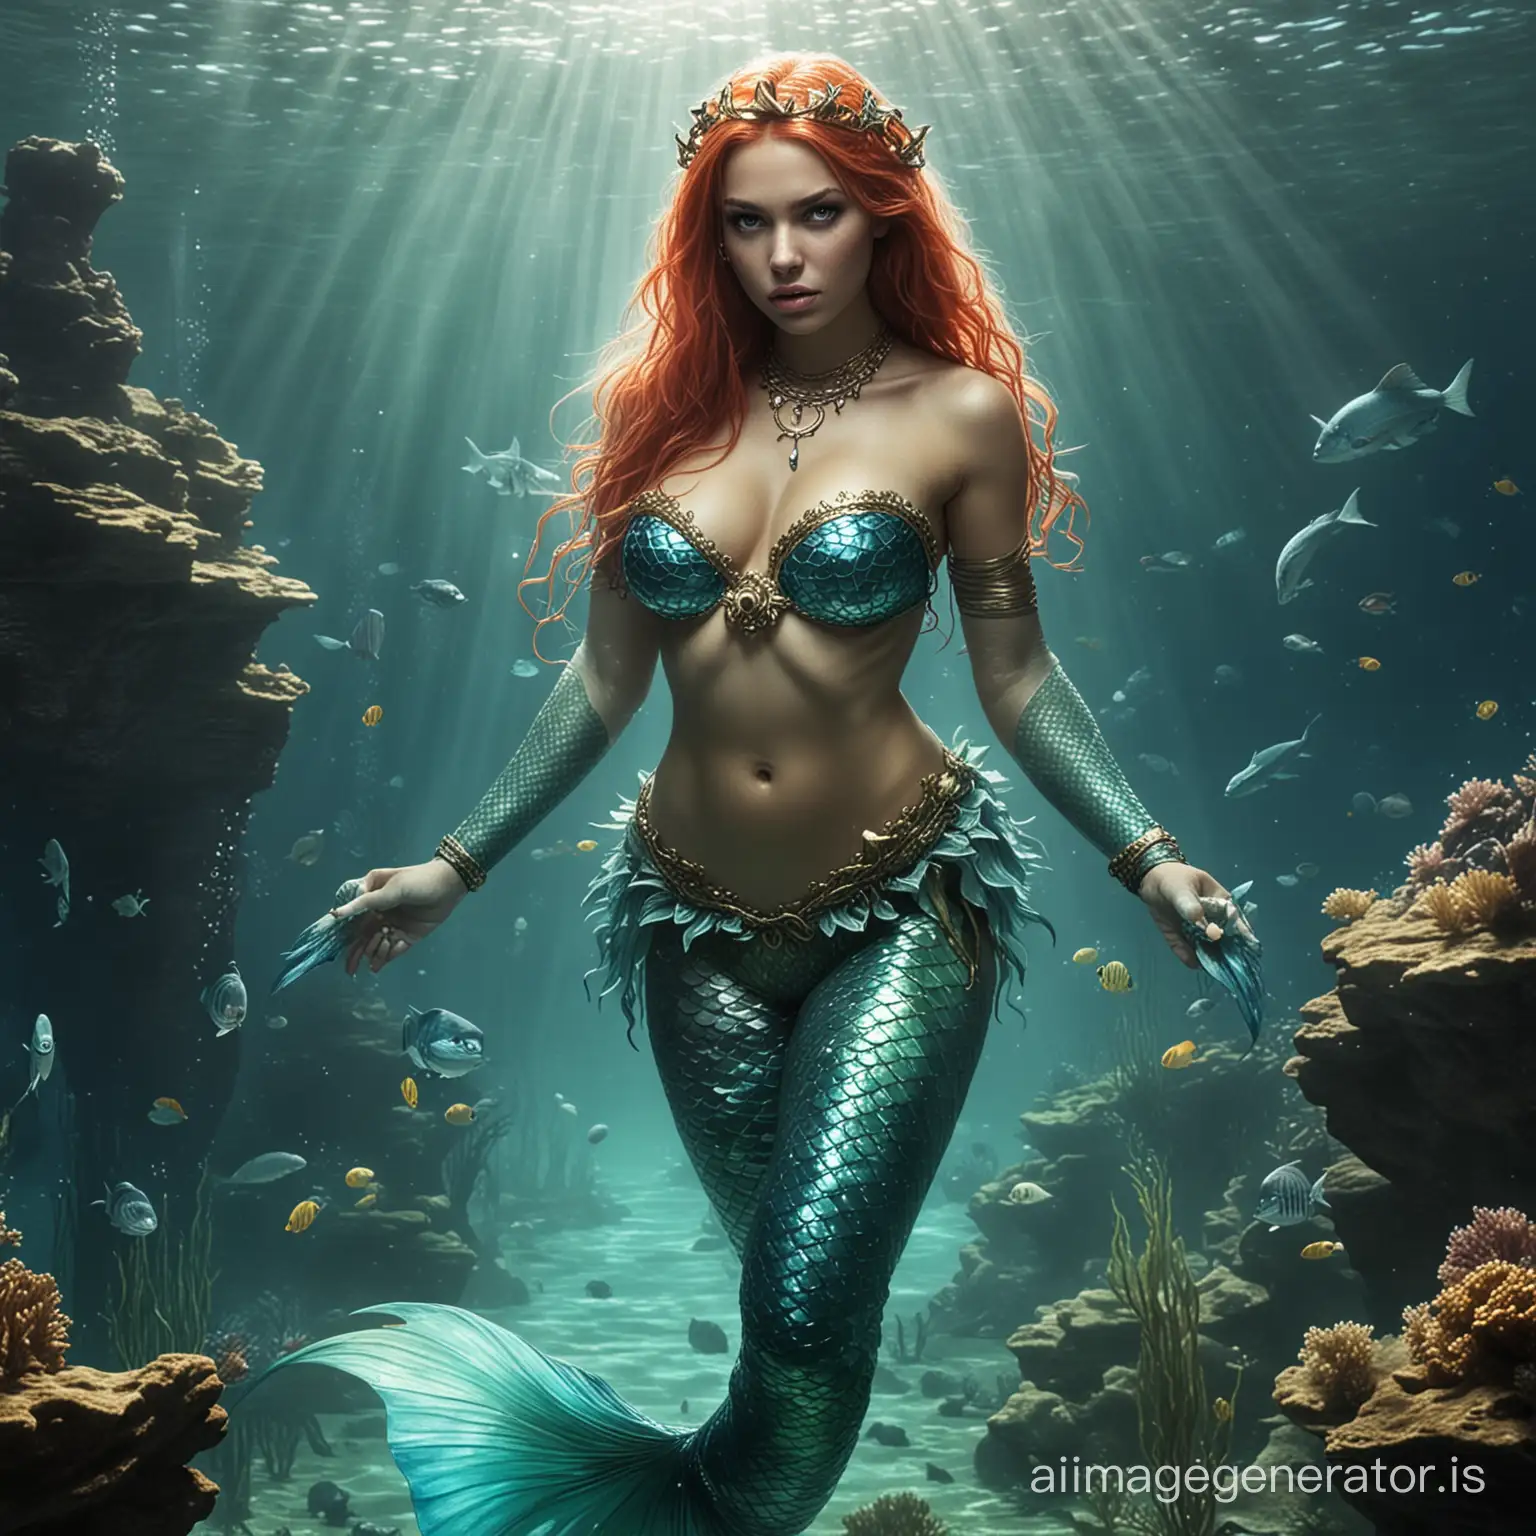 Enslaved-Mermaid-in-Captivity-Fantasy-Art-of-a-Captured-Sea-Creature